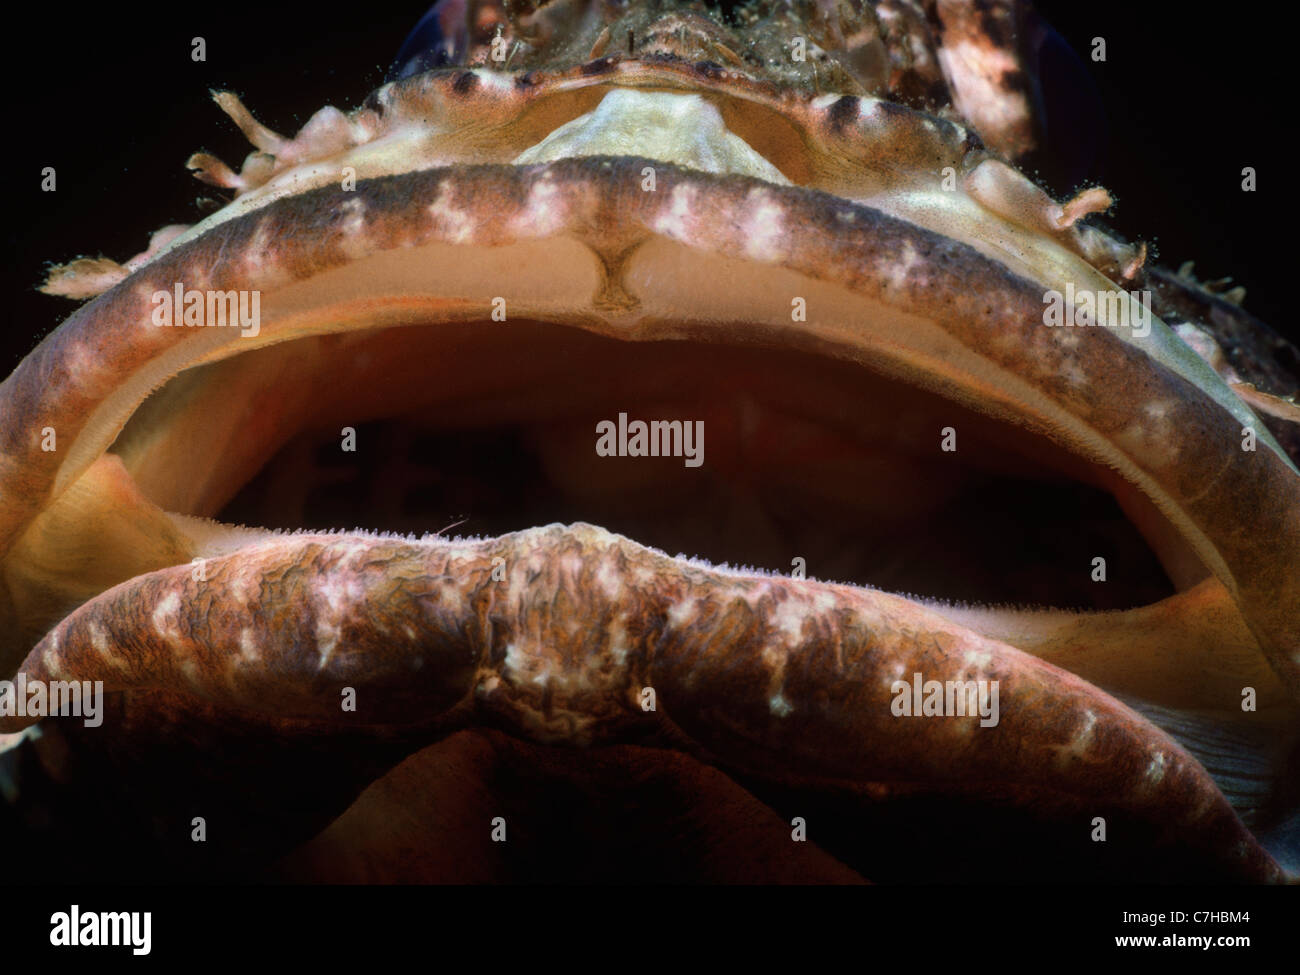 Mouth of poisonous California Scorpionfish (Scorpaena guttata) - Channel Islands, California - Pacific Ocean Stock Photo